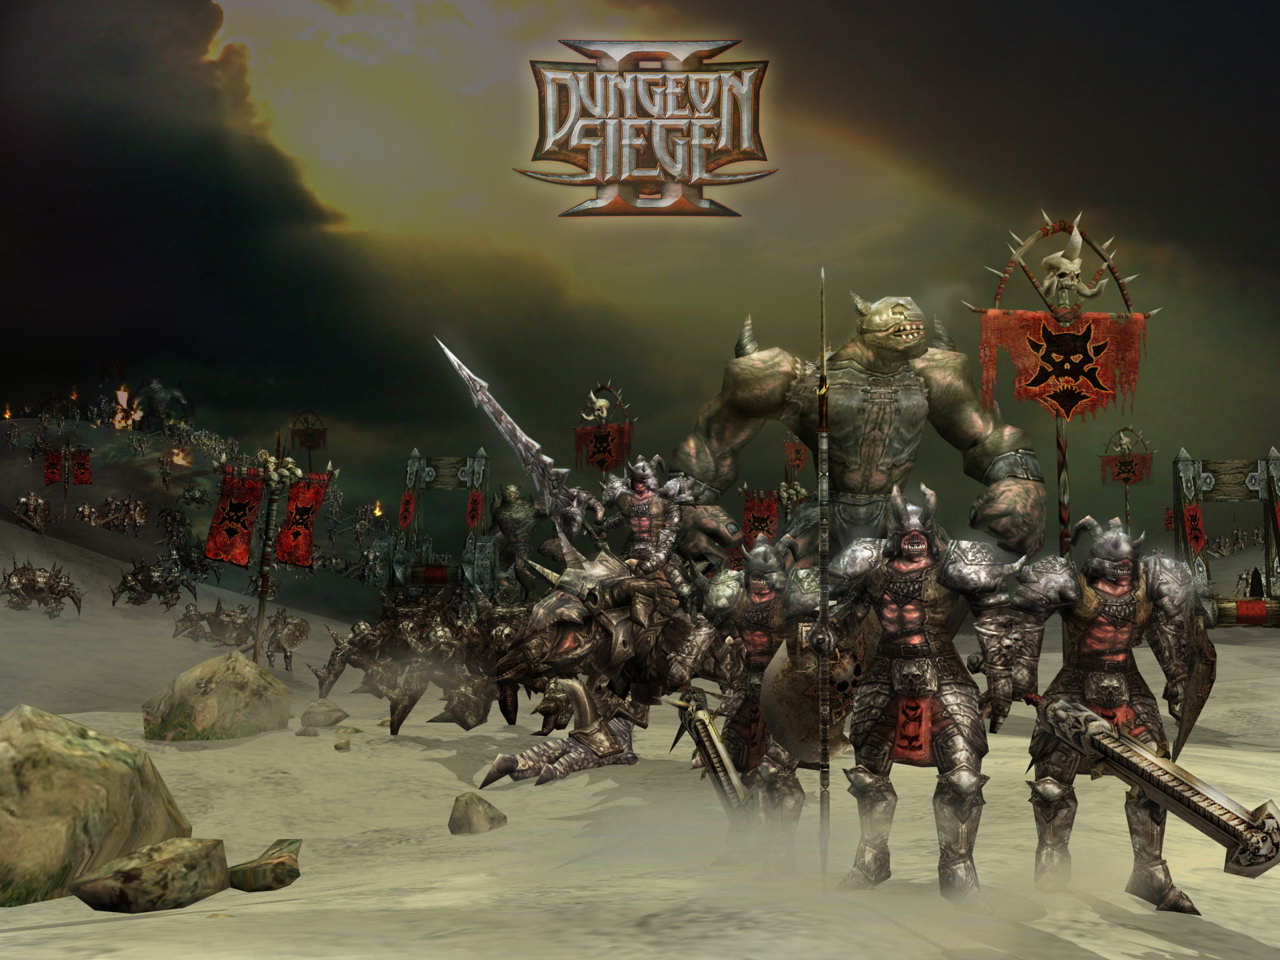    Dungeon Siege II